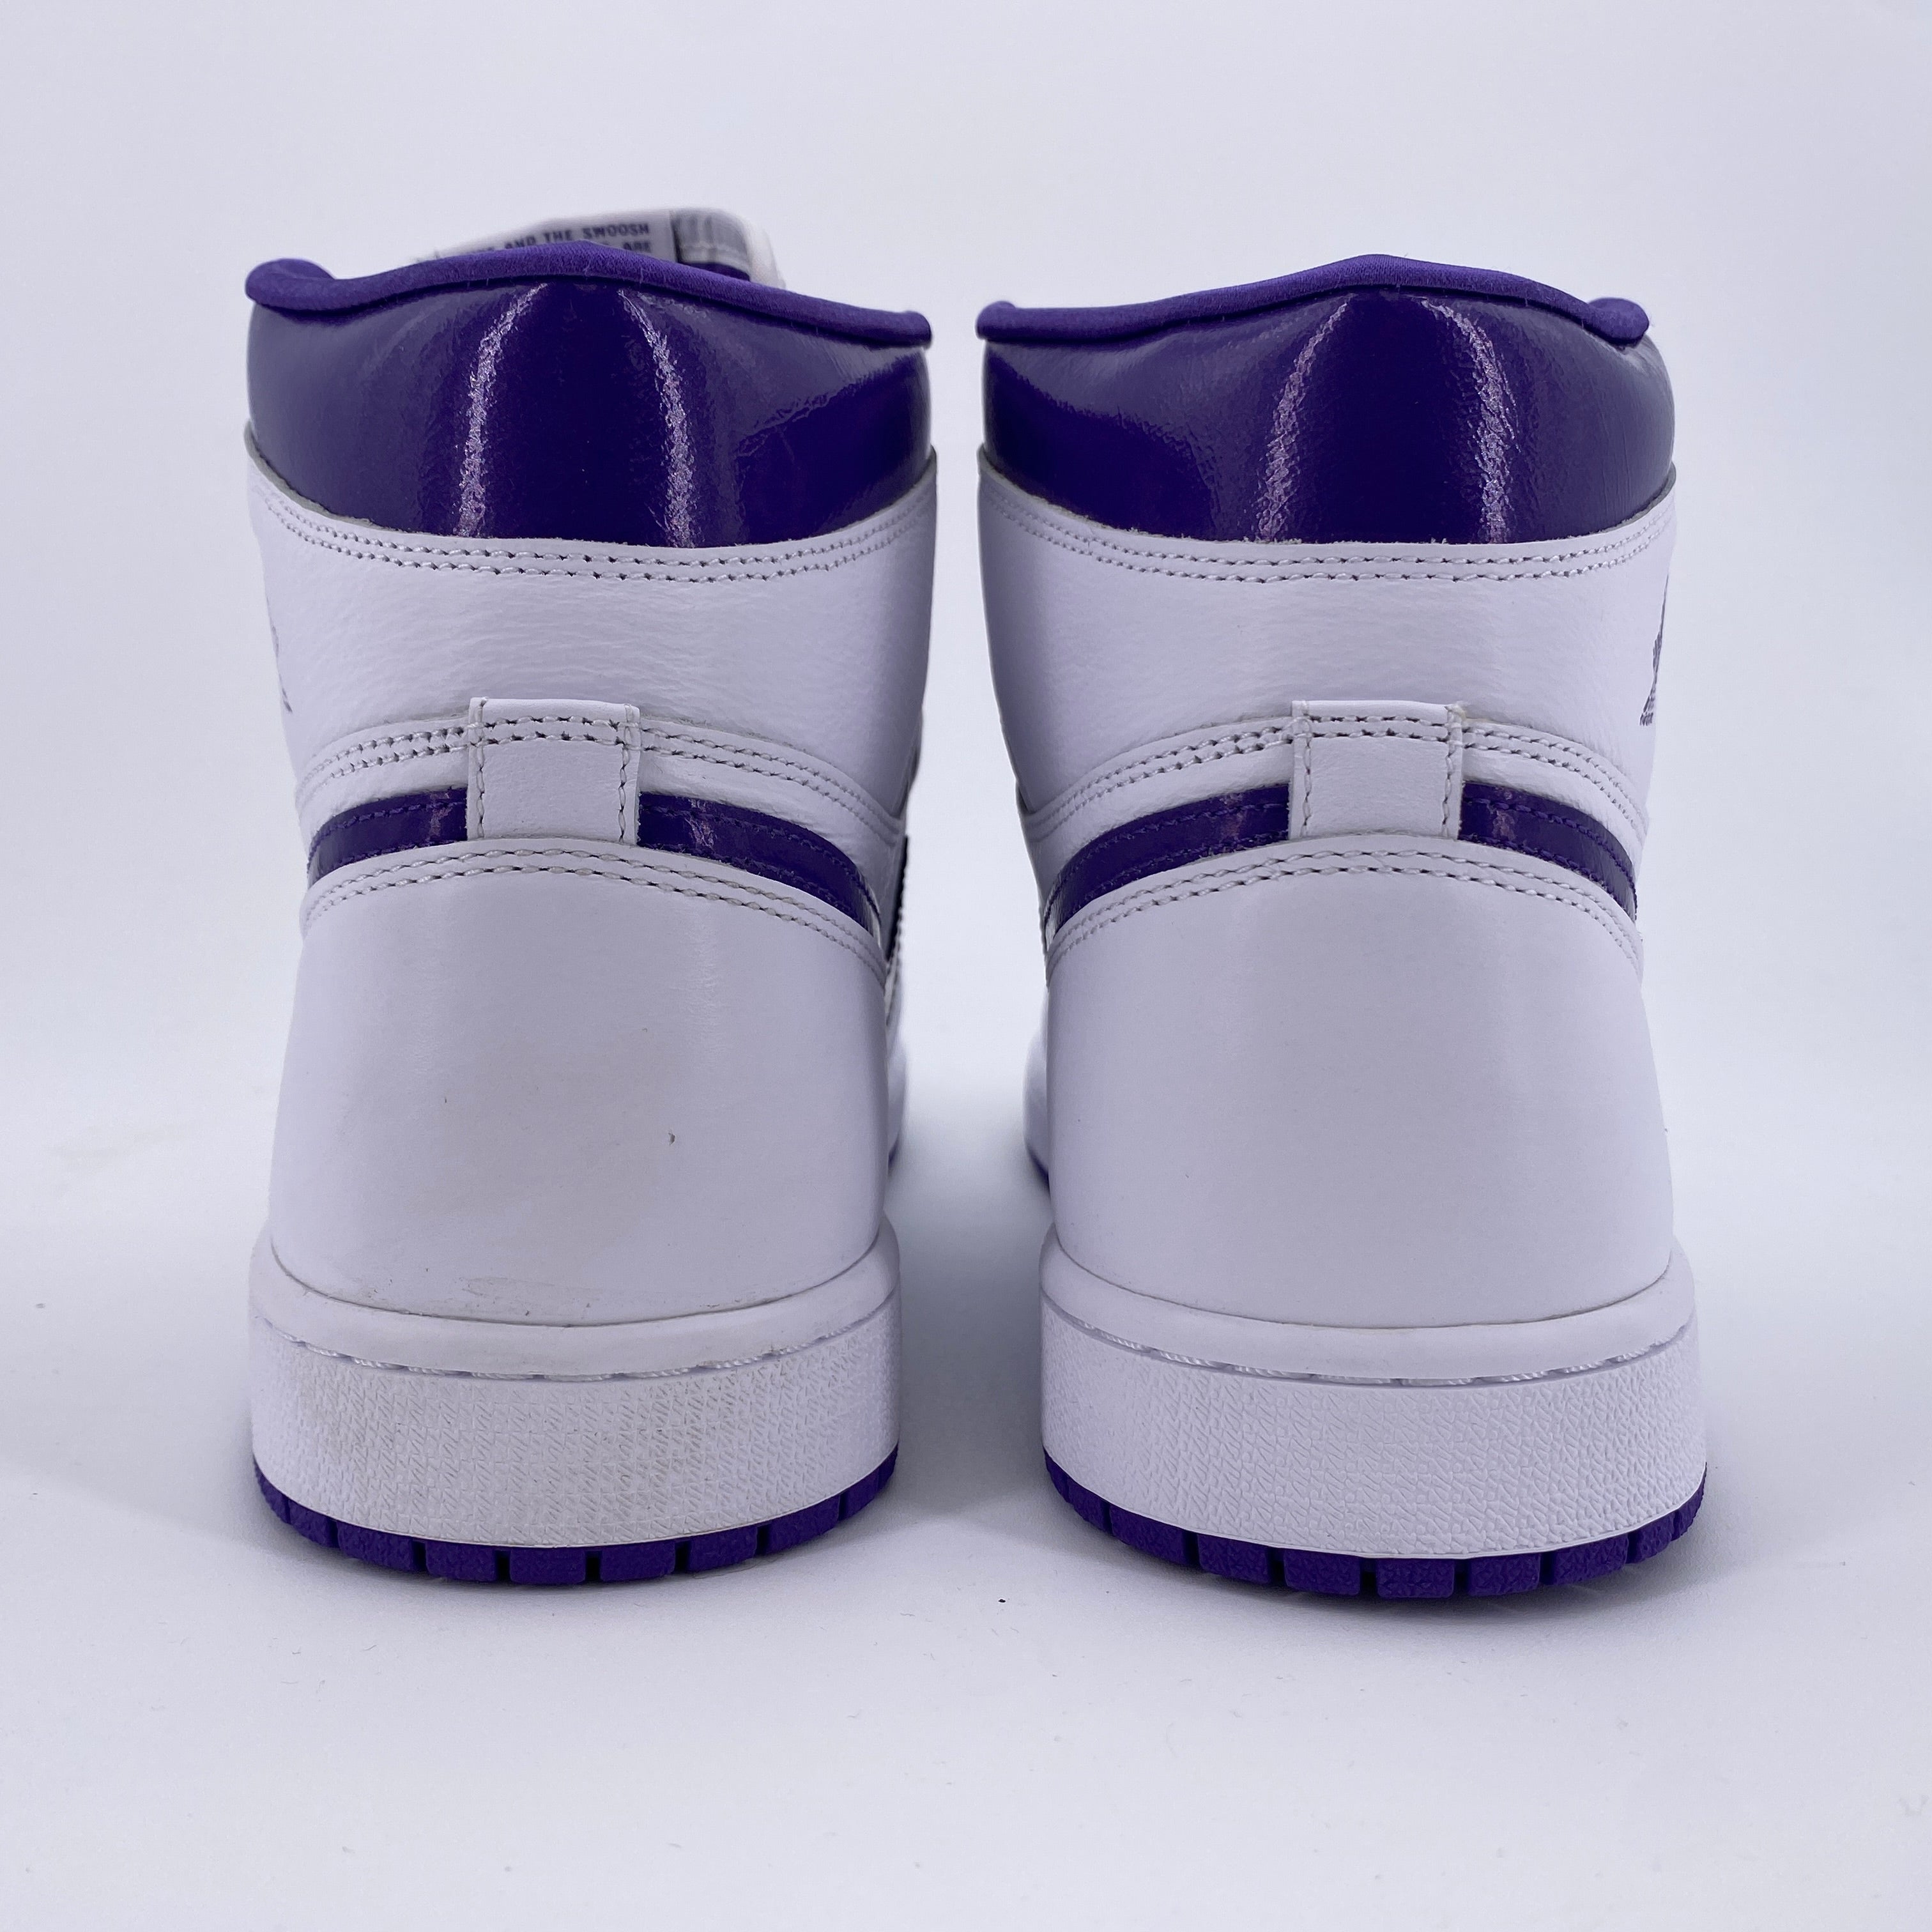 Air Jordan (W) 1 Retro High OG "Metallic Purple" 2021 New Size 12W